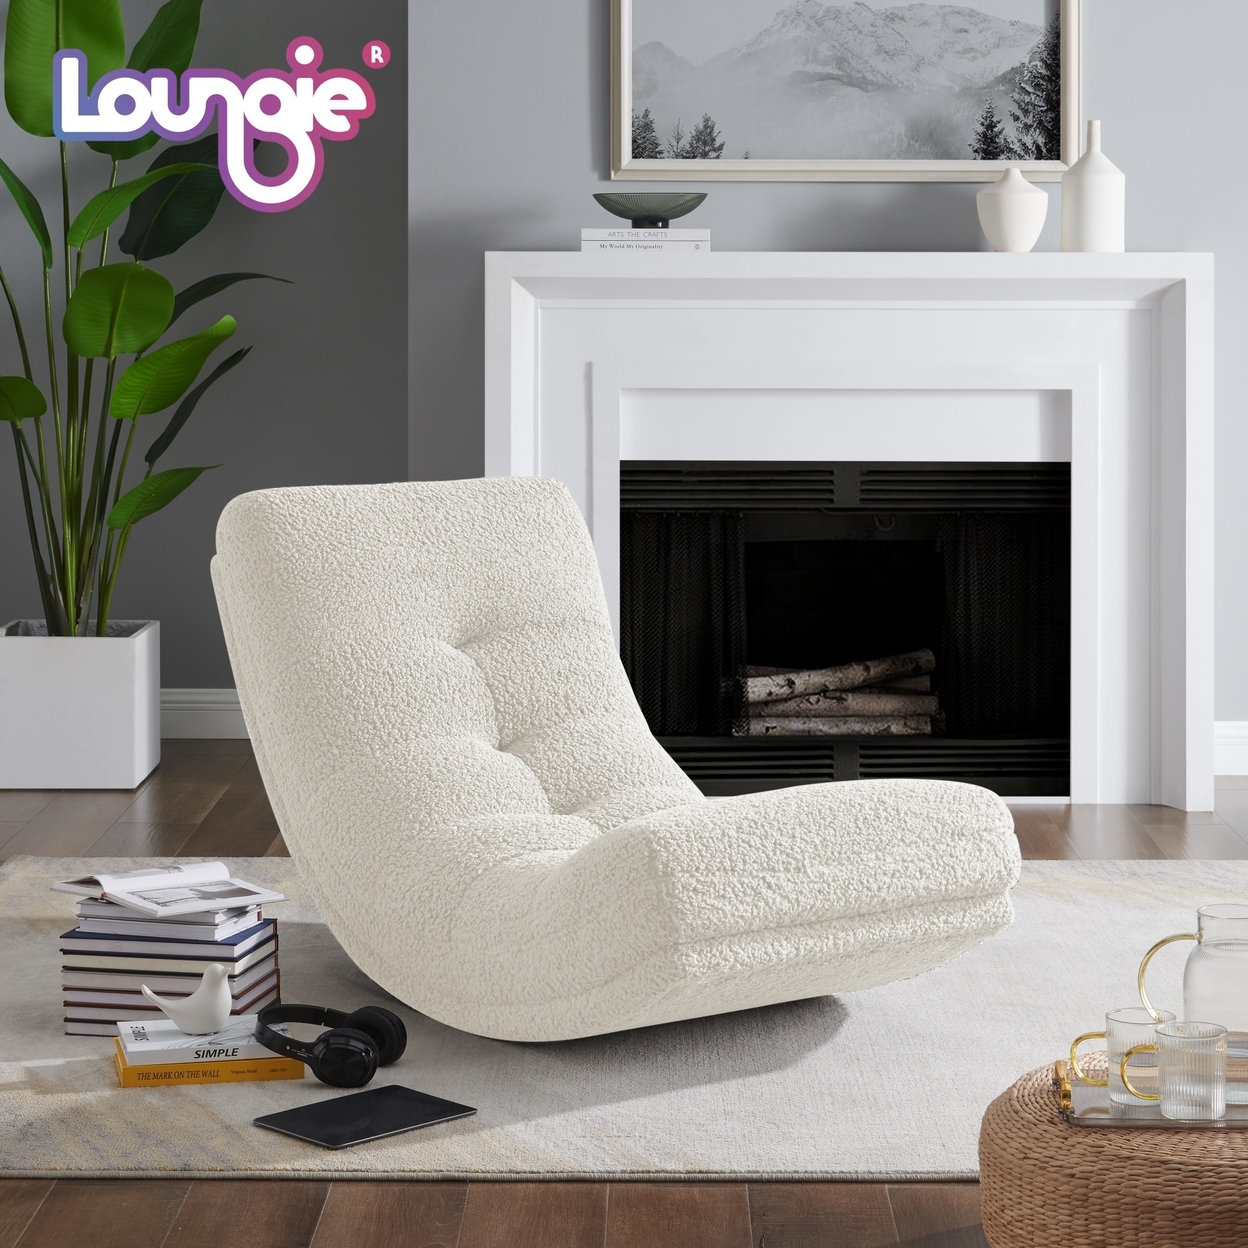 Kaniya Chair - Sherpa Upholstery, Tufted, Gentle Rocking Design, Ergonomic Shape And Padded Seat - Black